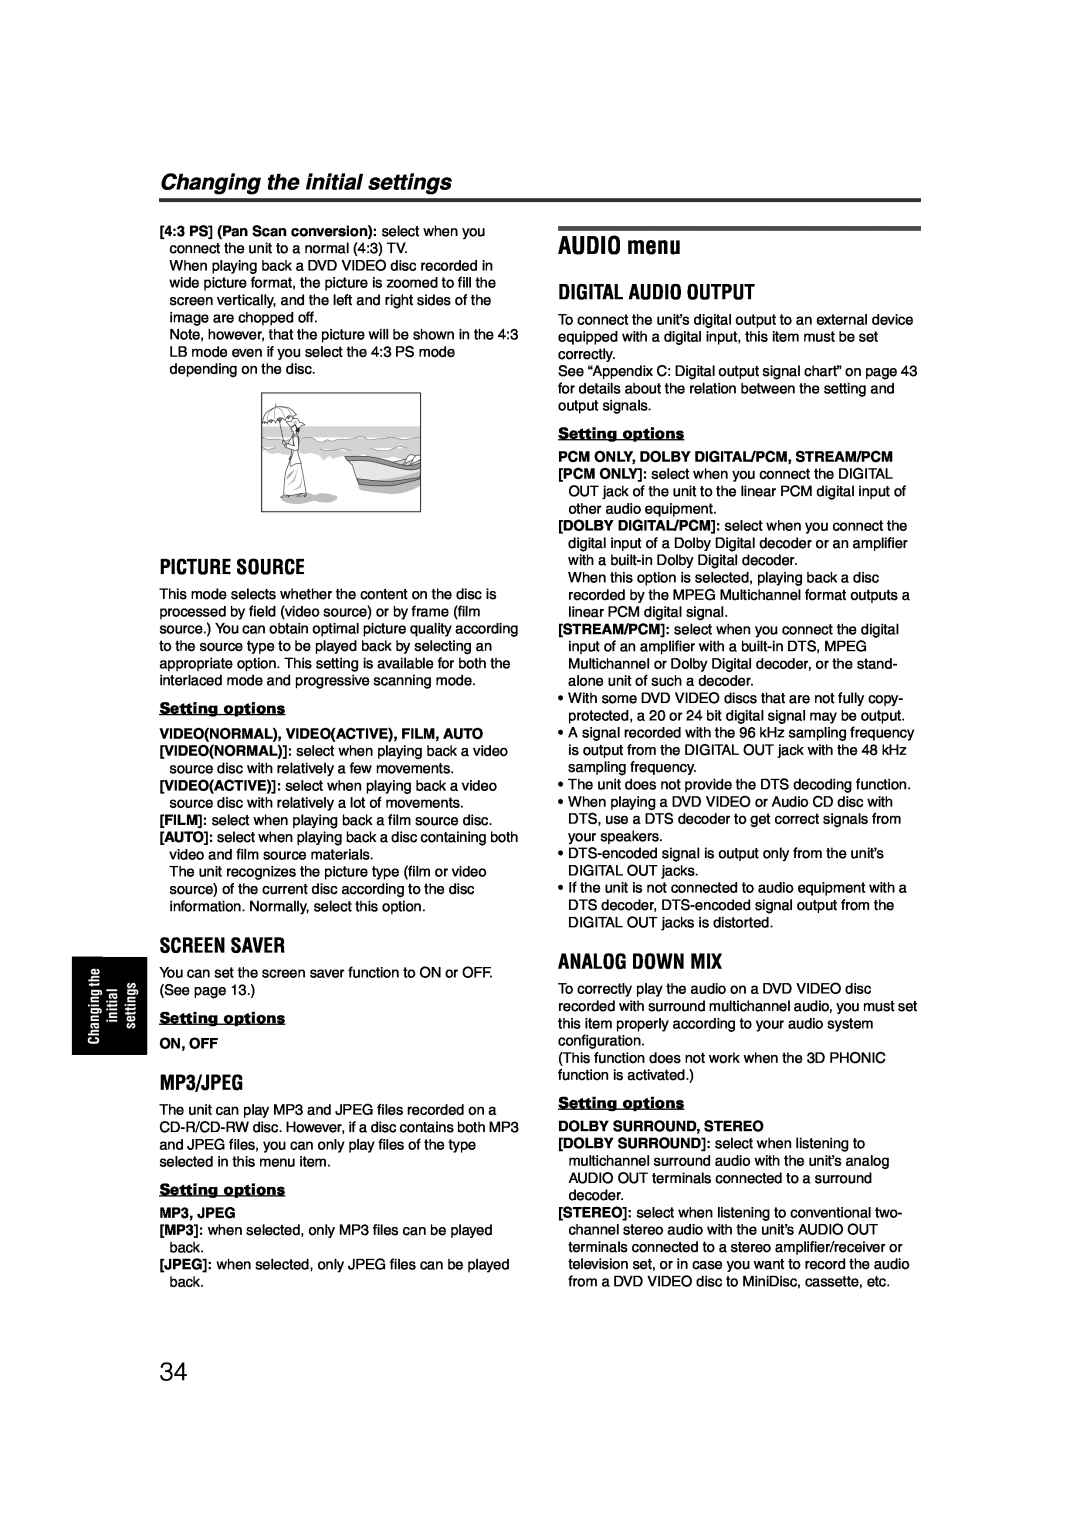 JVC LET0227-003A manual AUDIO menu, Picture Source, Digital Audio Output, Screen Saver, MP3/JPEG, Analog Down Mix 